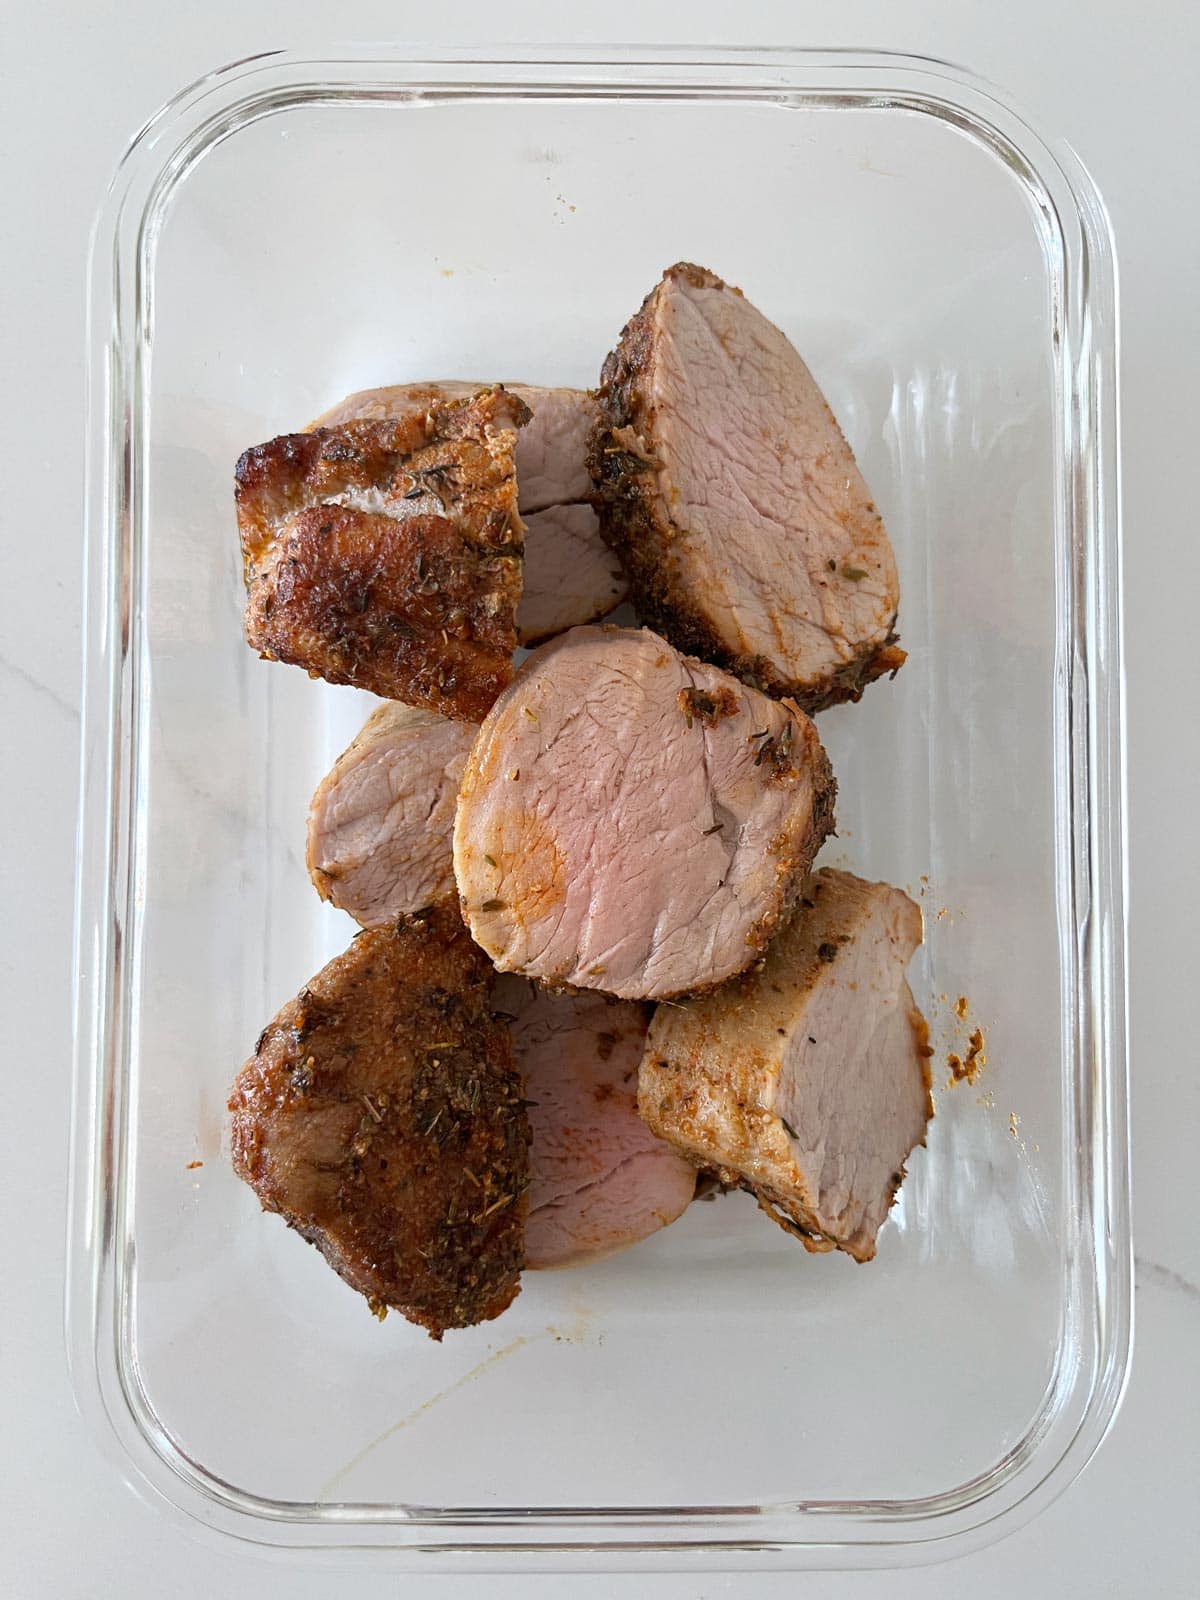 Leftover sliced pork tenderloin is kept in a glass food storage container.